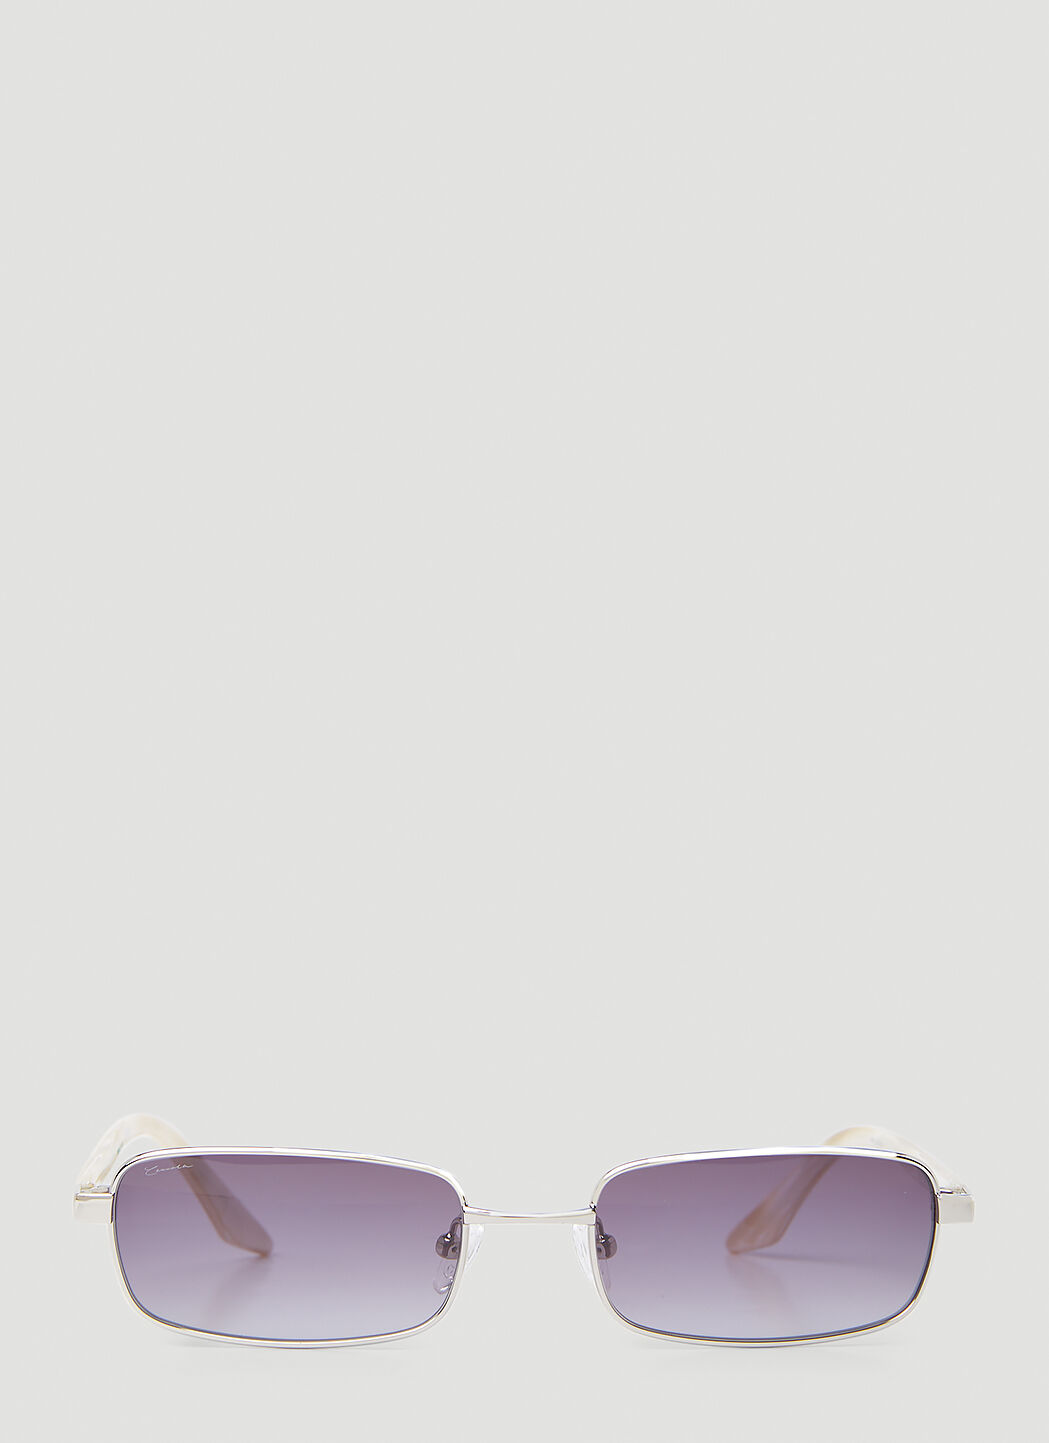 Lexxola Kenny Sunglasses 블랙 lxx0353006